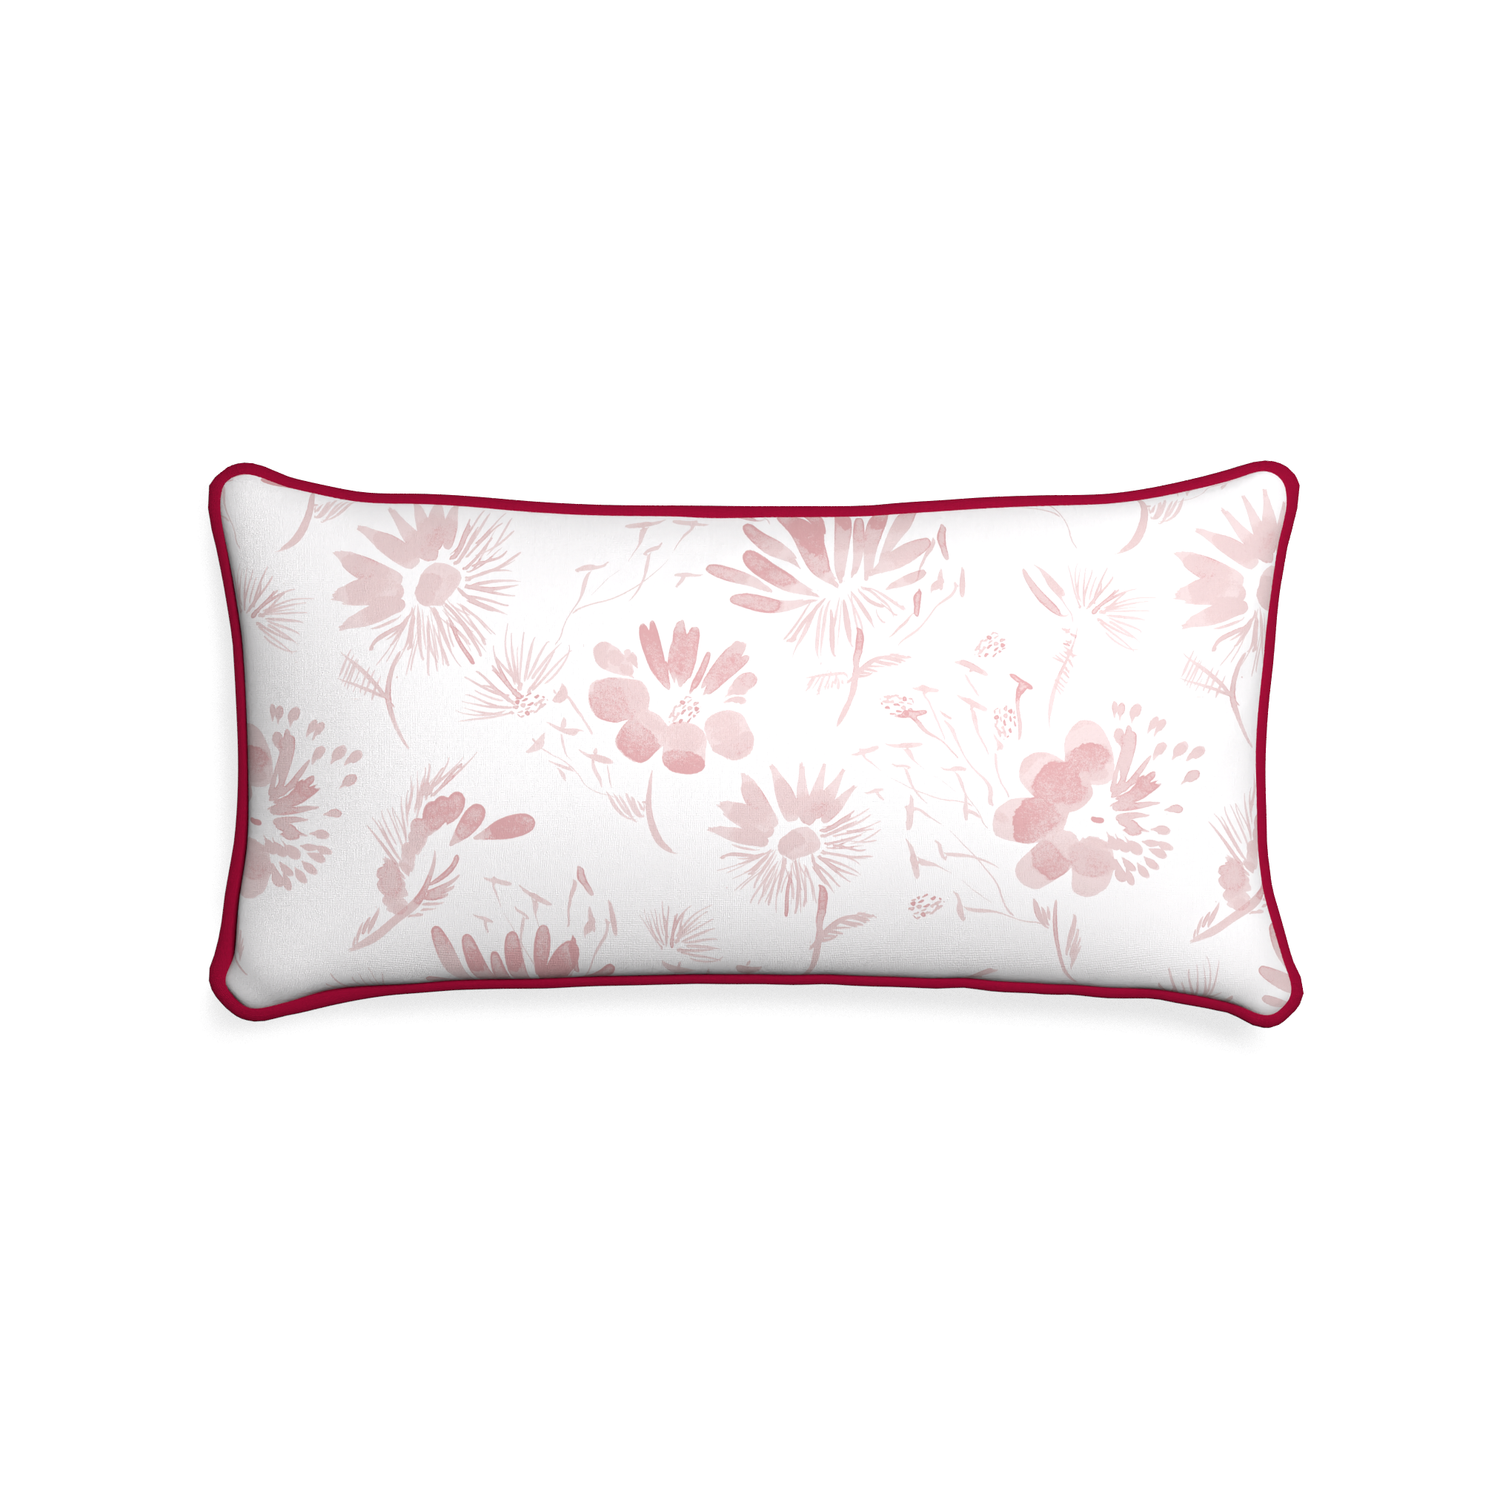 Midi-lumbar blake custom pink floralpillow with raspberry piping on white background